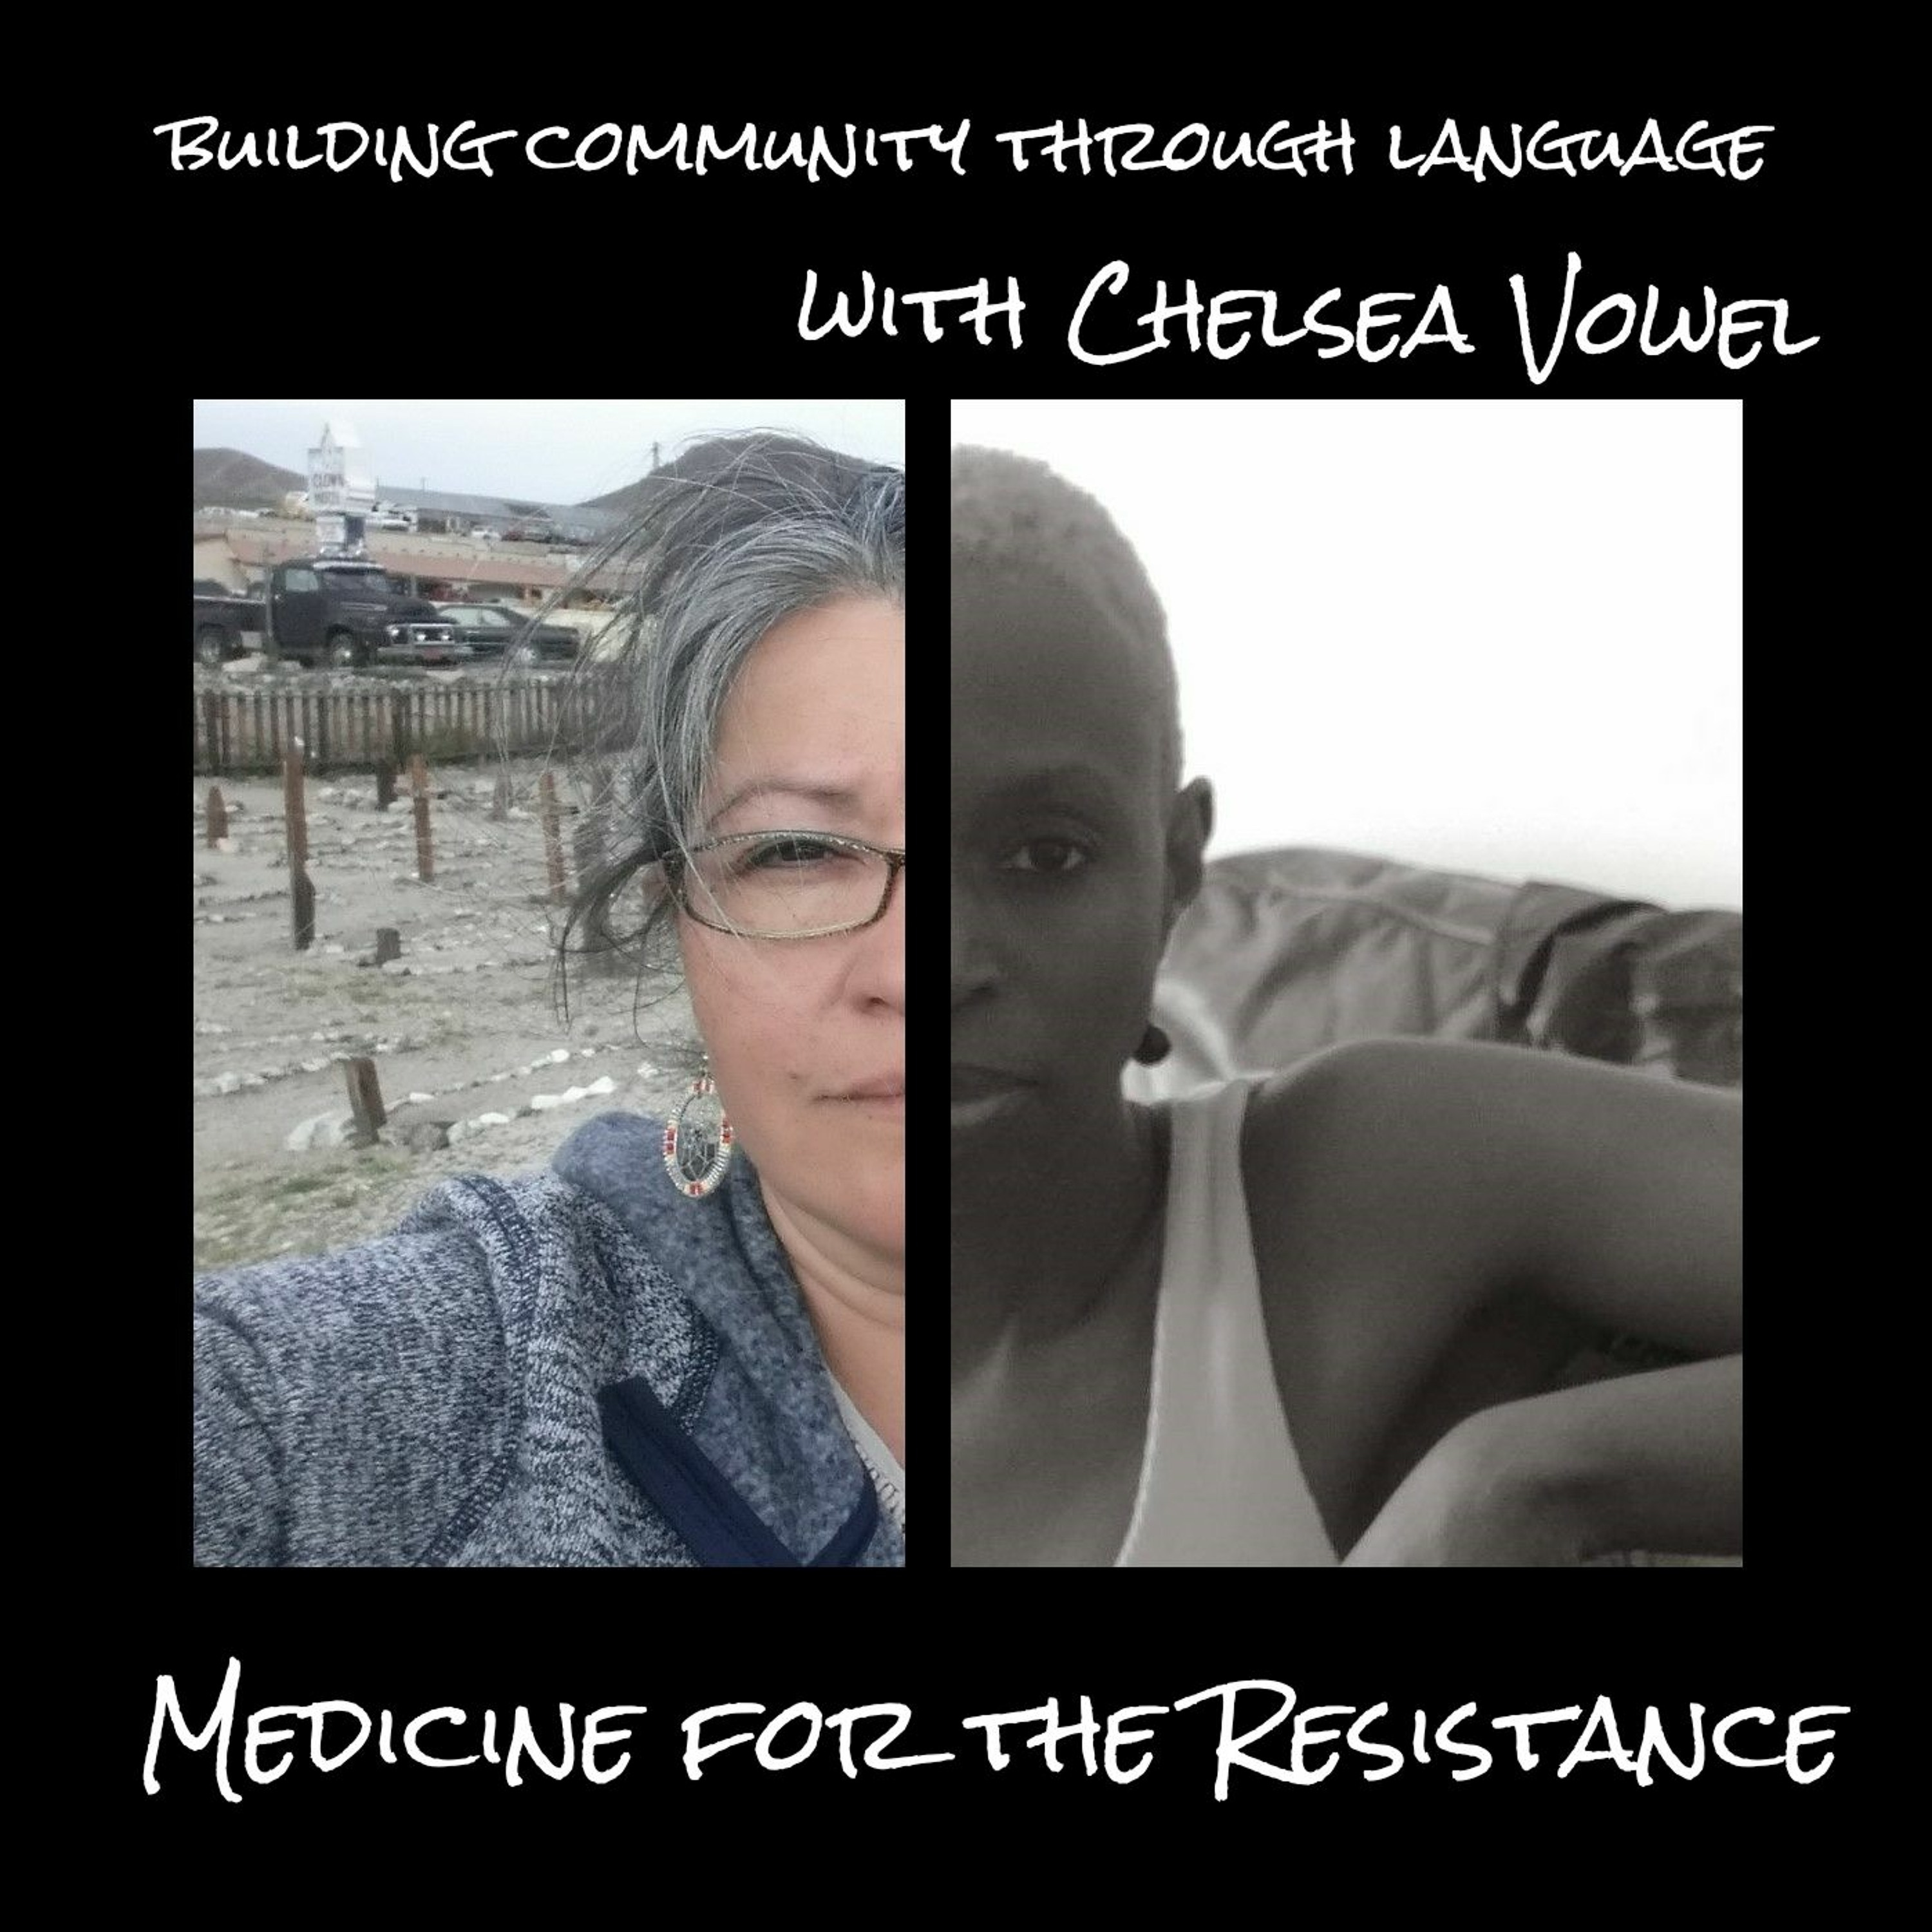 Building community through language with Chelsea Vowel